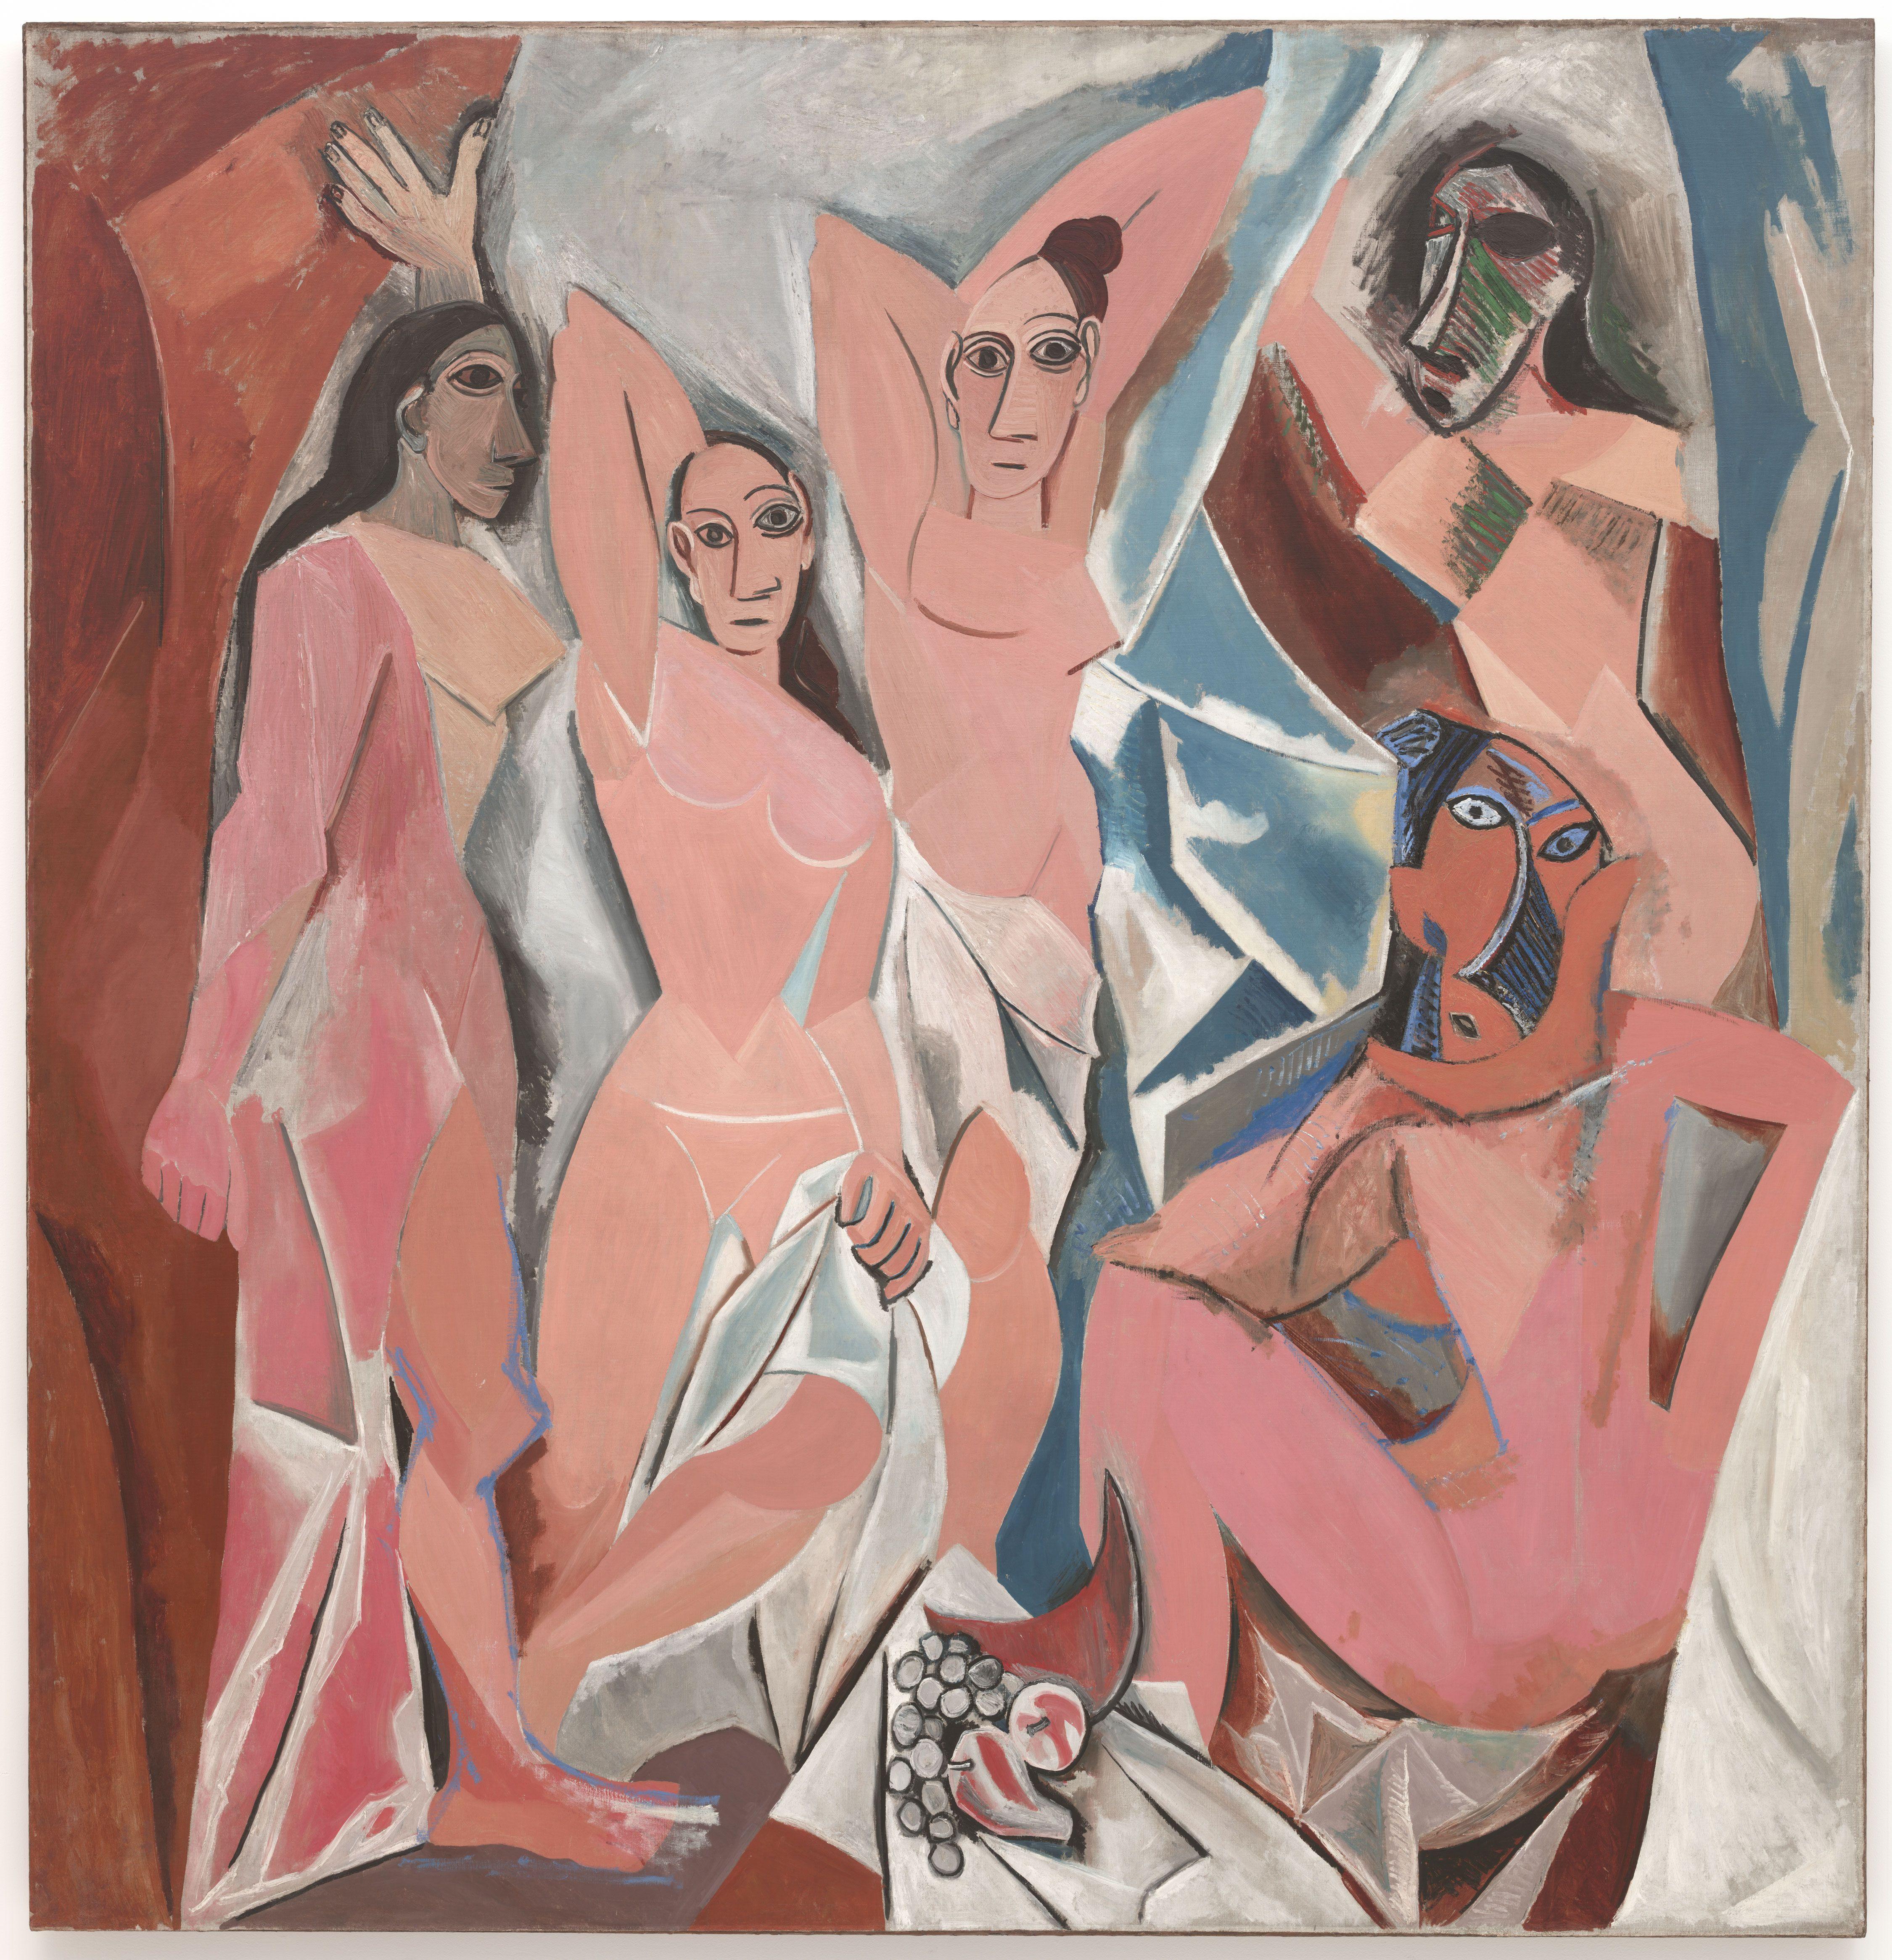 Les Demoiselles d'Avignon, Pablo Picasso, 1907 / Wikipedia